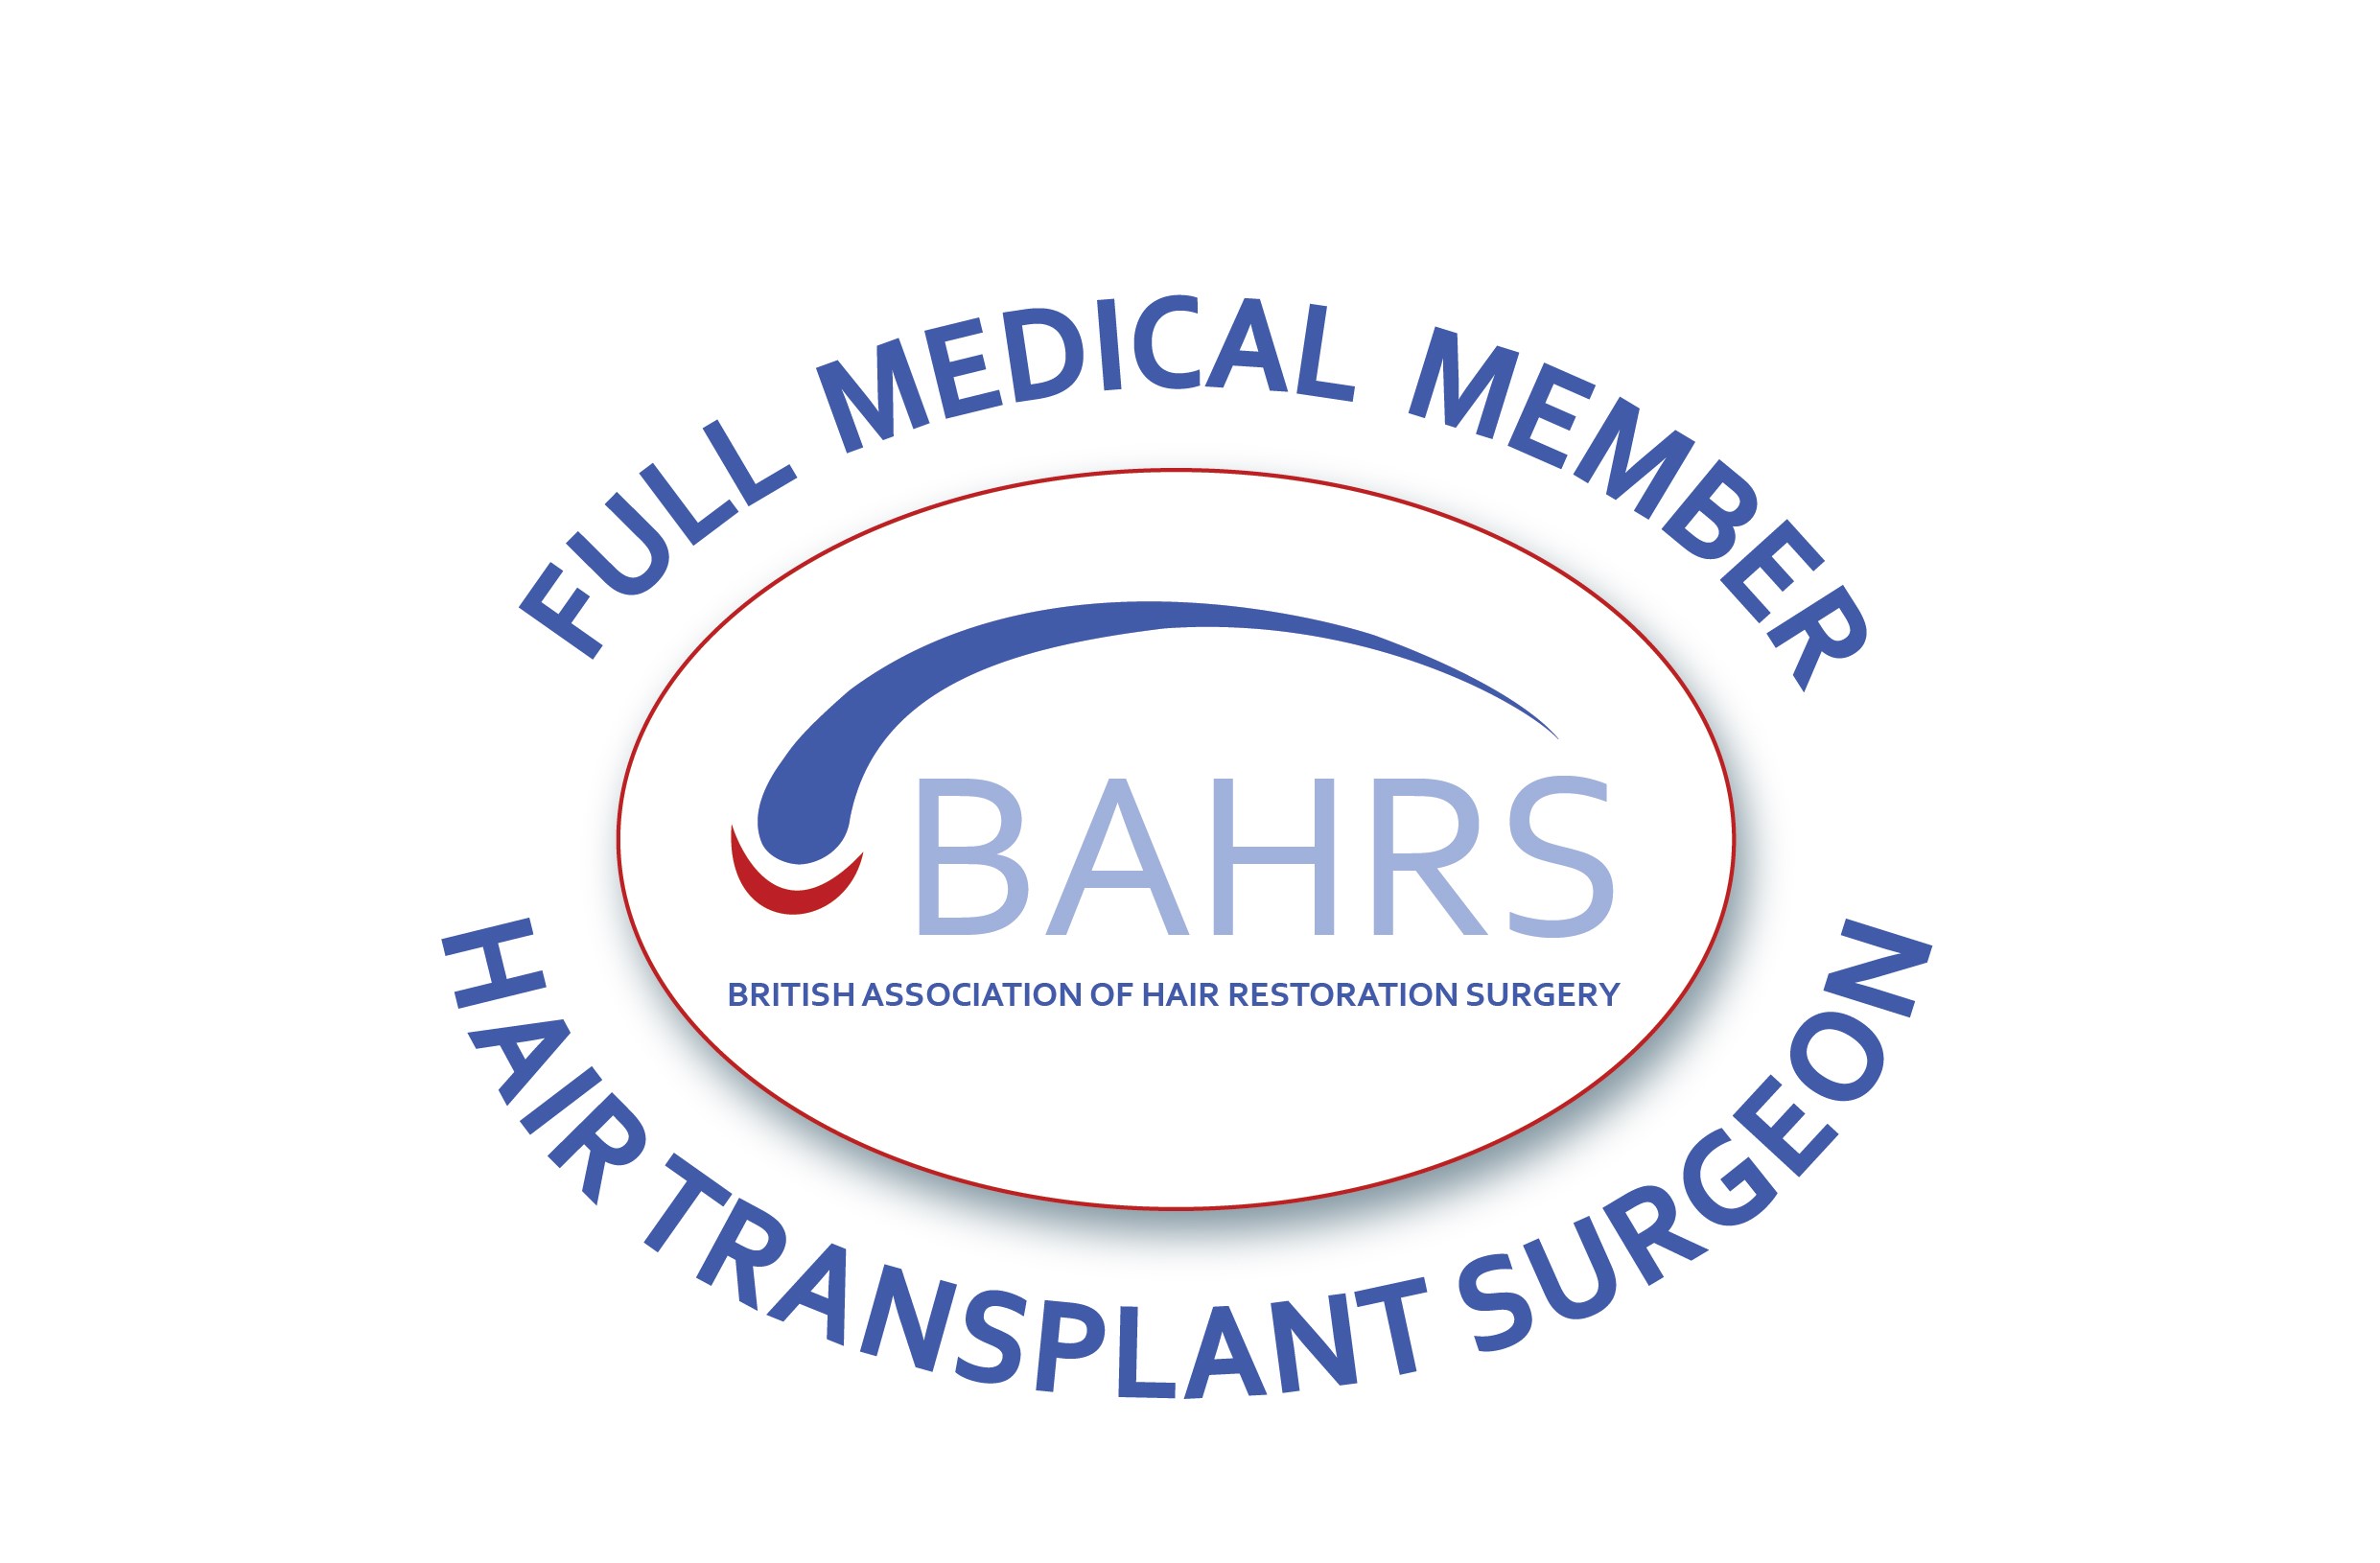 Full Medical Hair Transplant Surgeon Membership